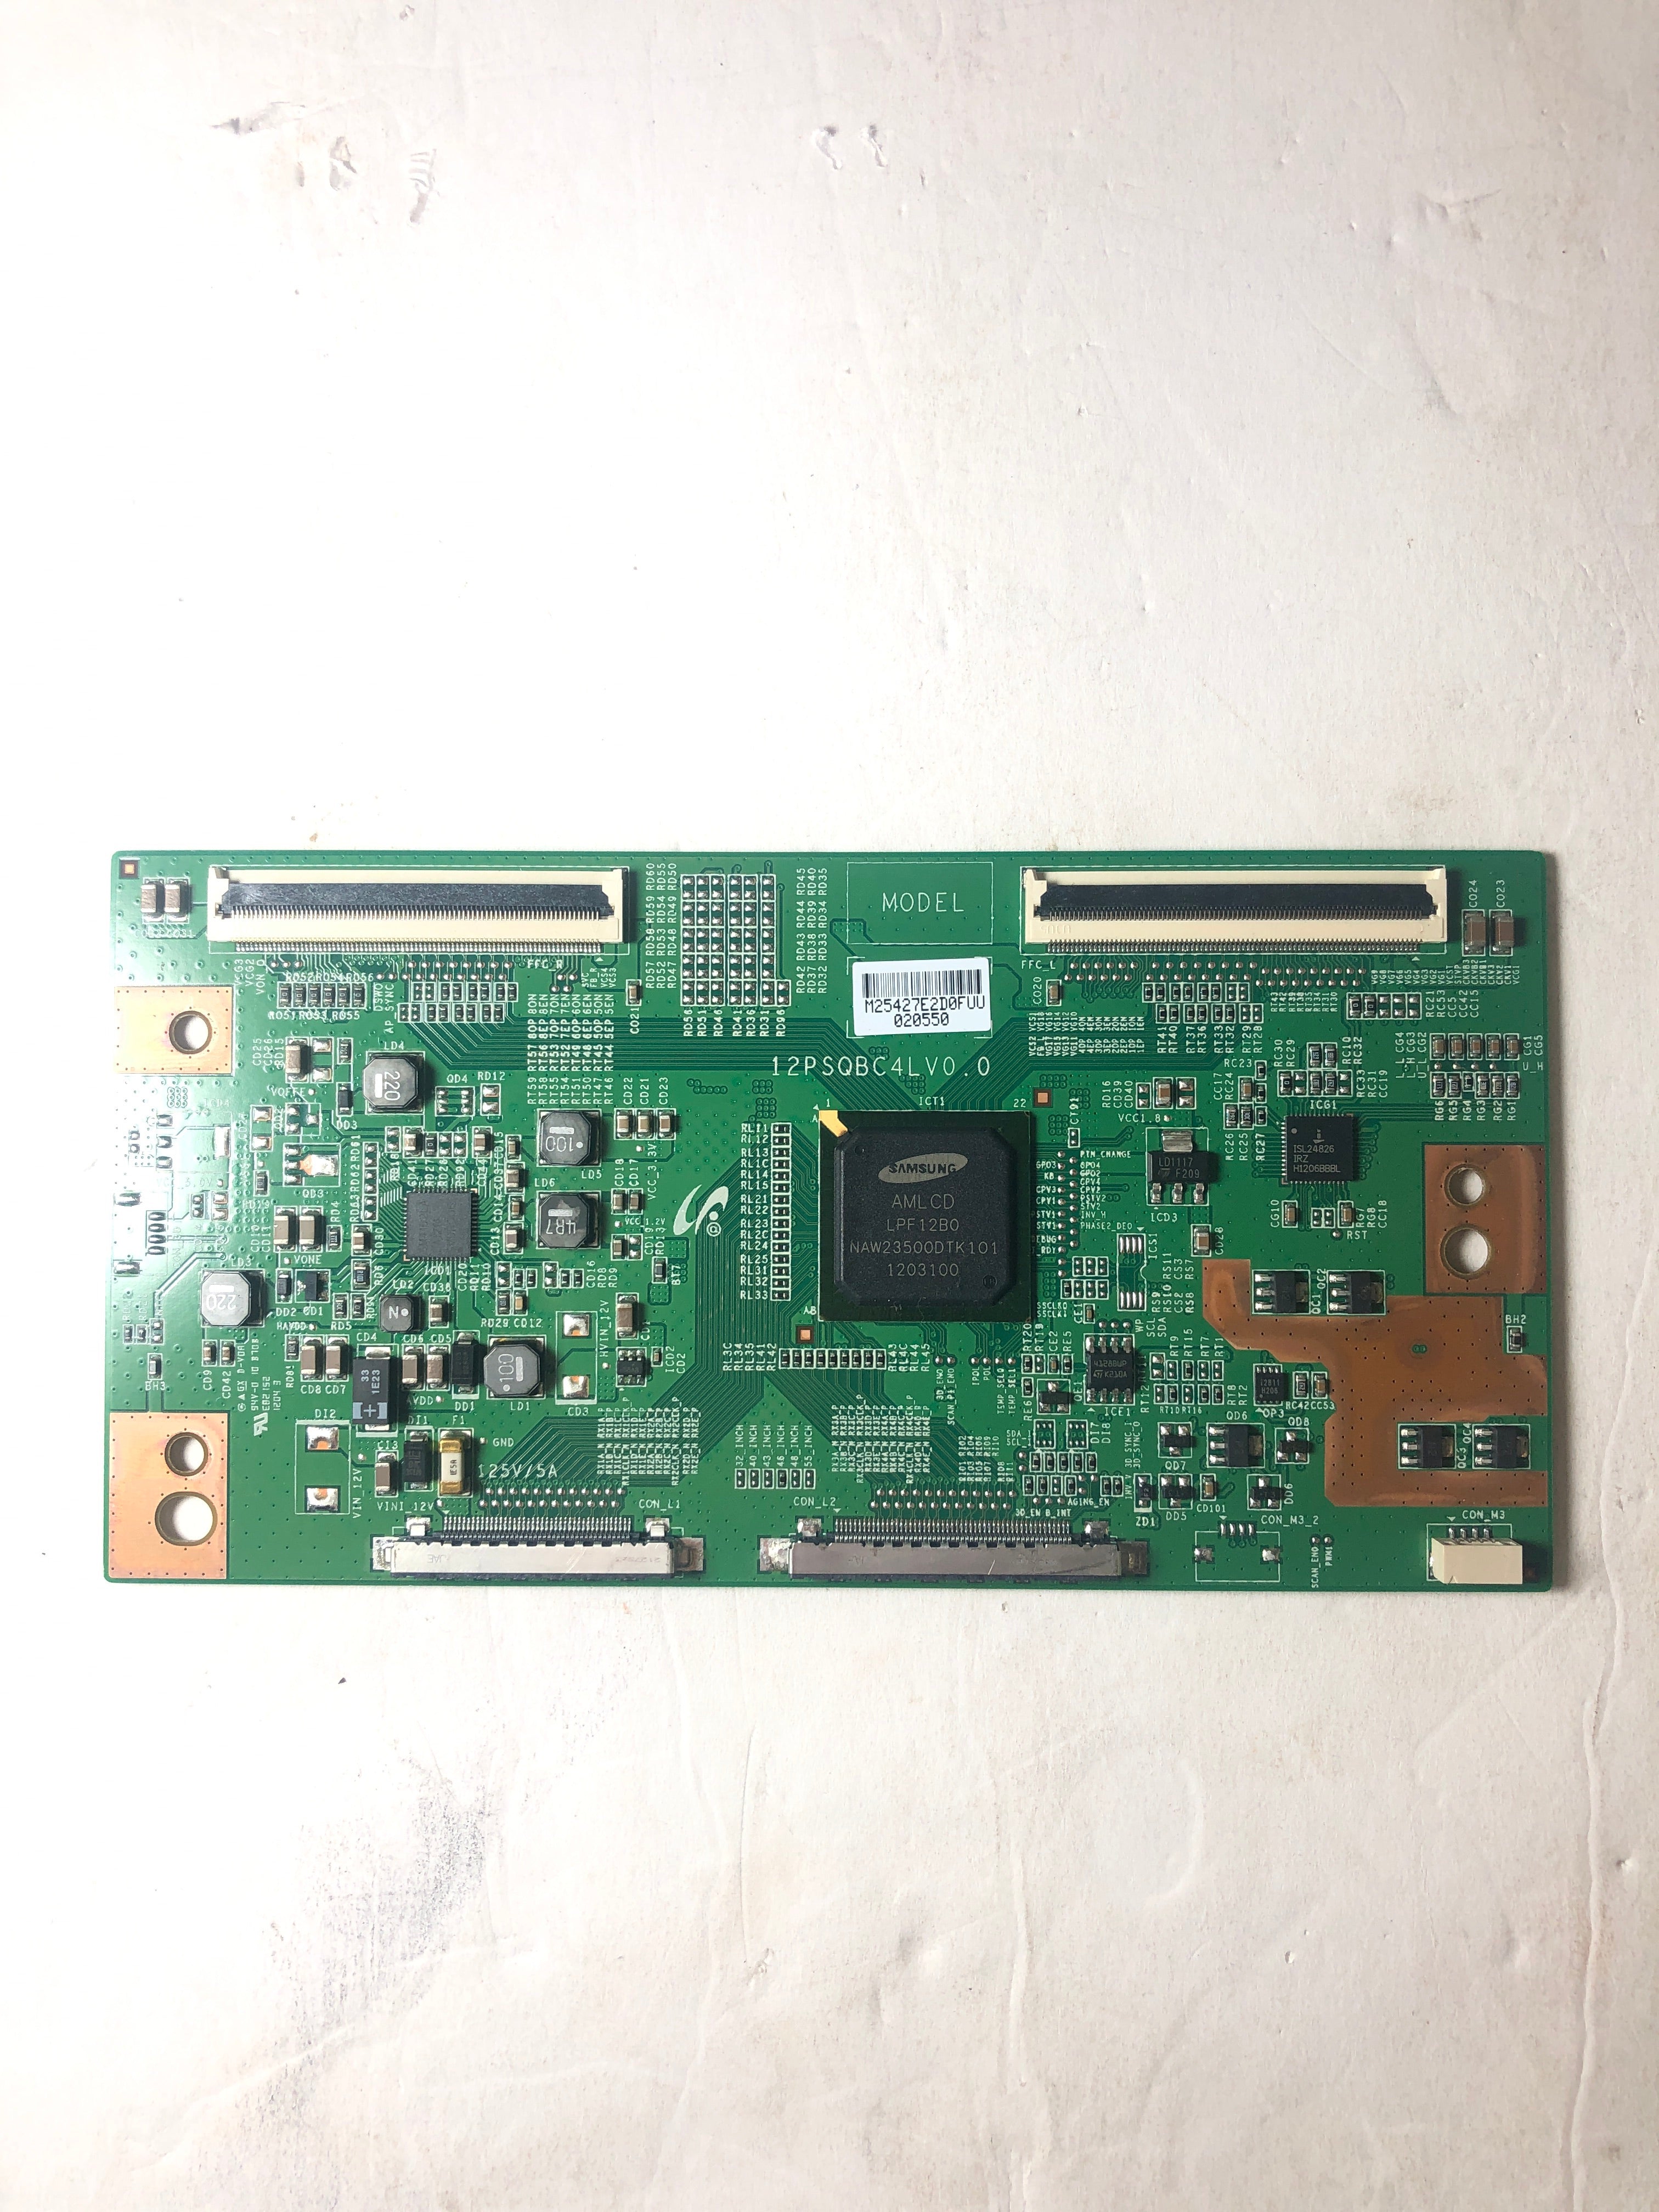 Toshiba LJ94-25427E LJ94-25427J (12PSQBC4LV0.0) T-Con Board